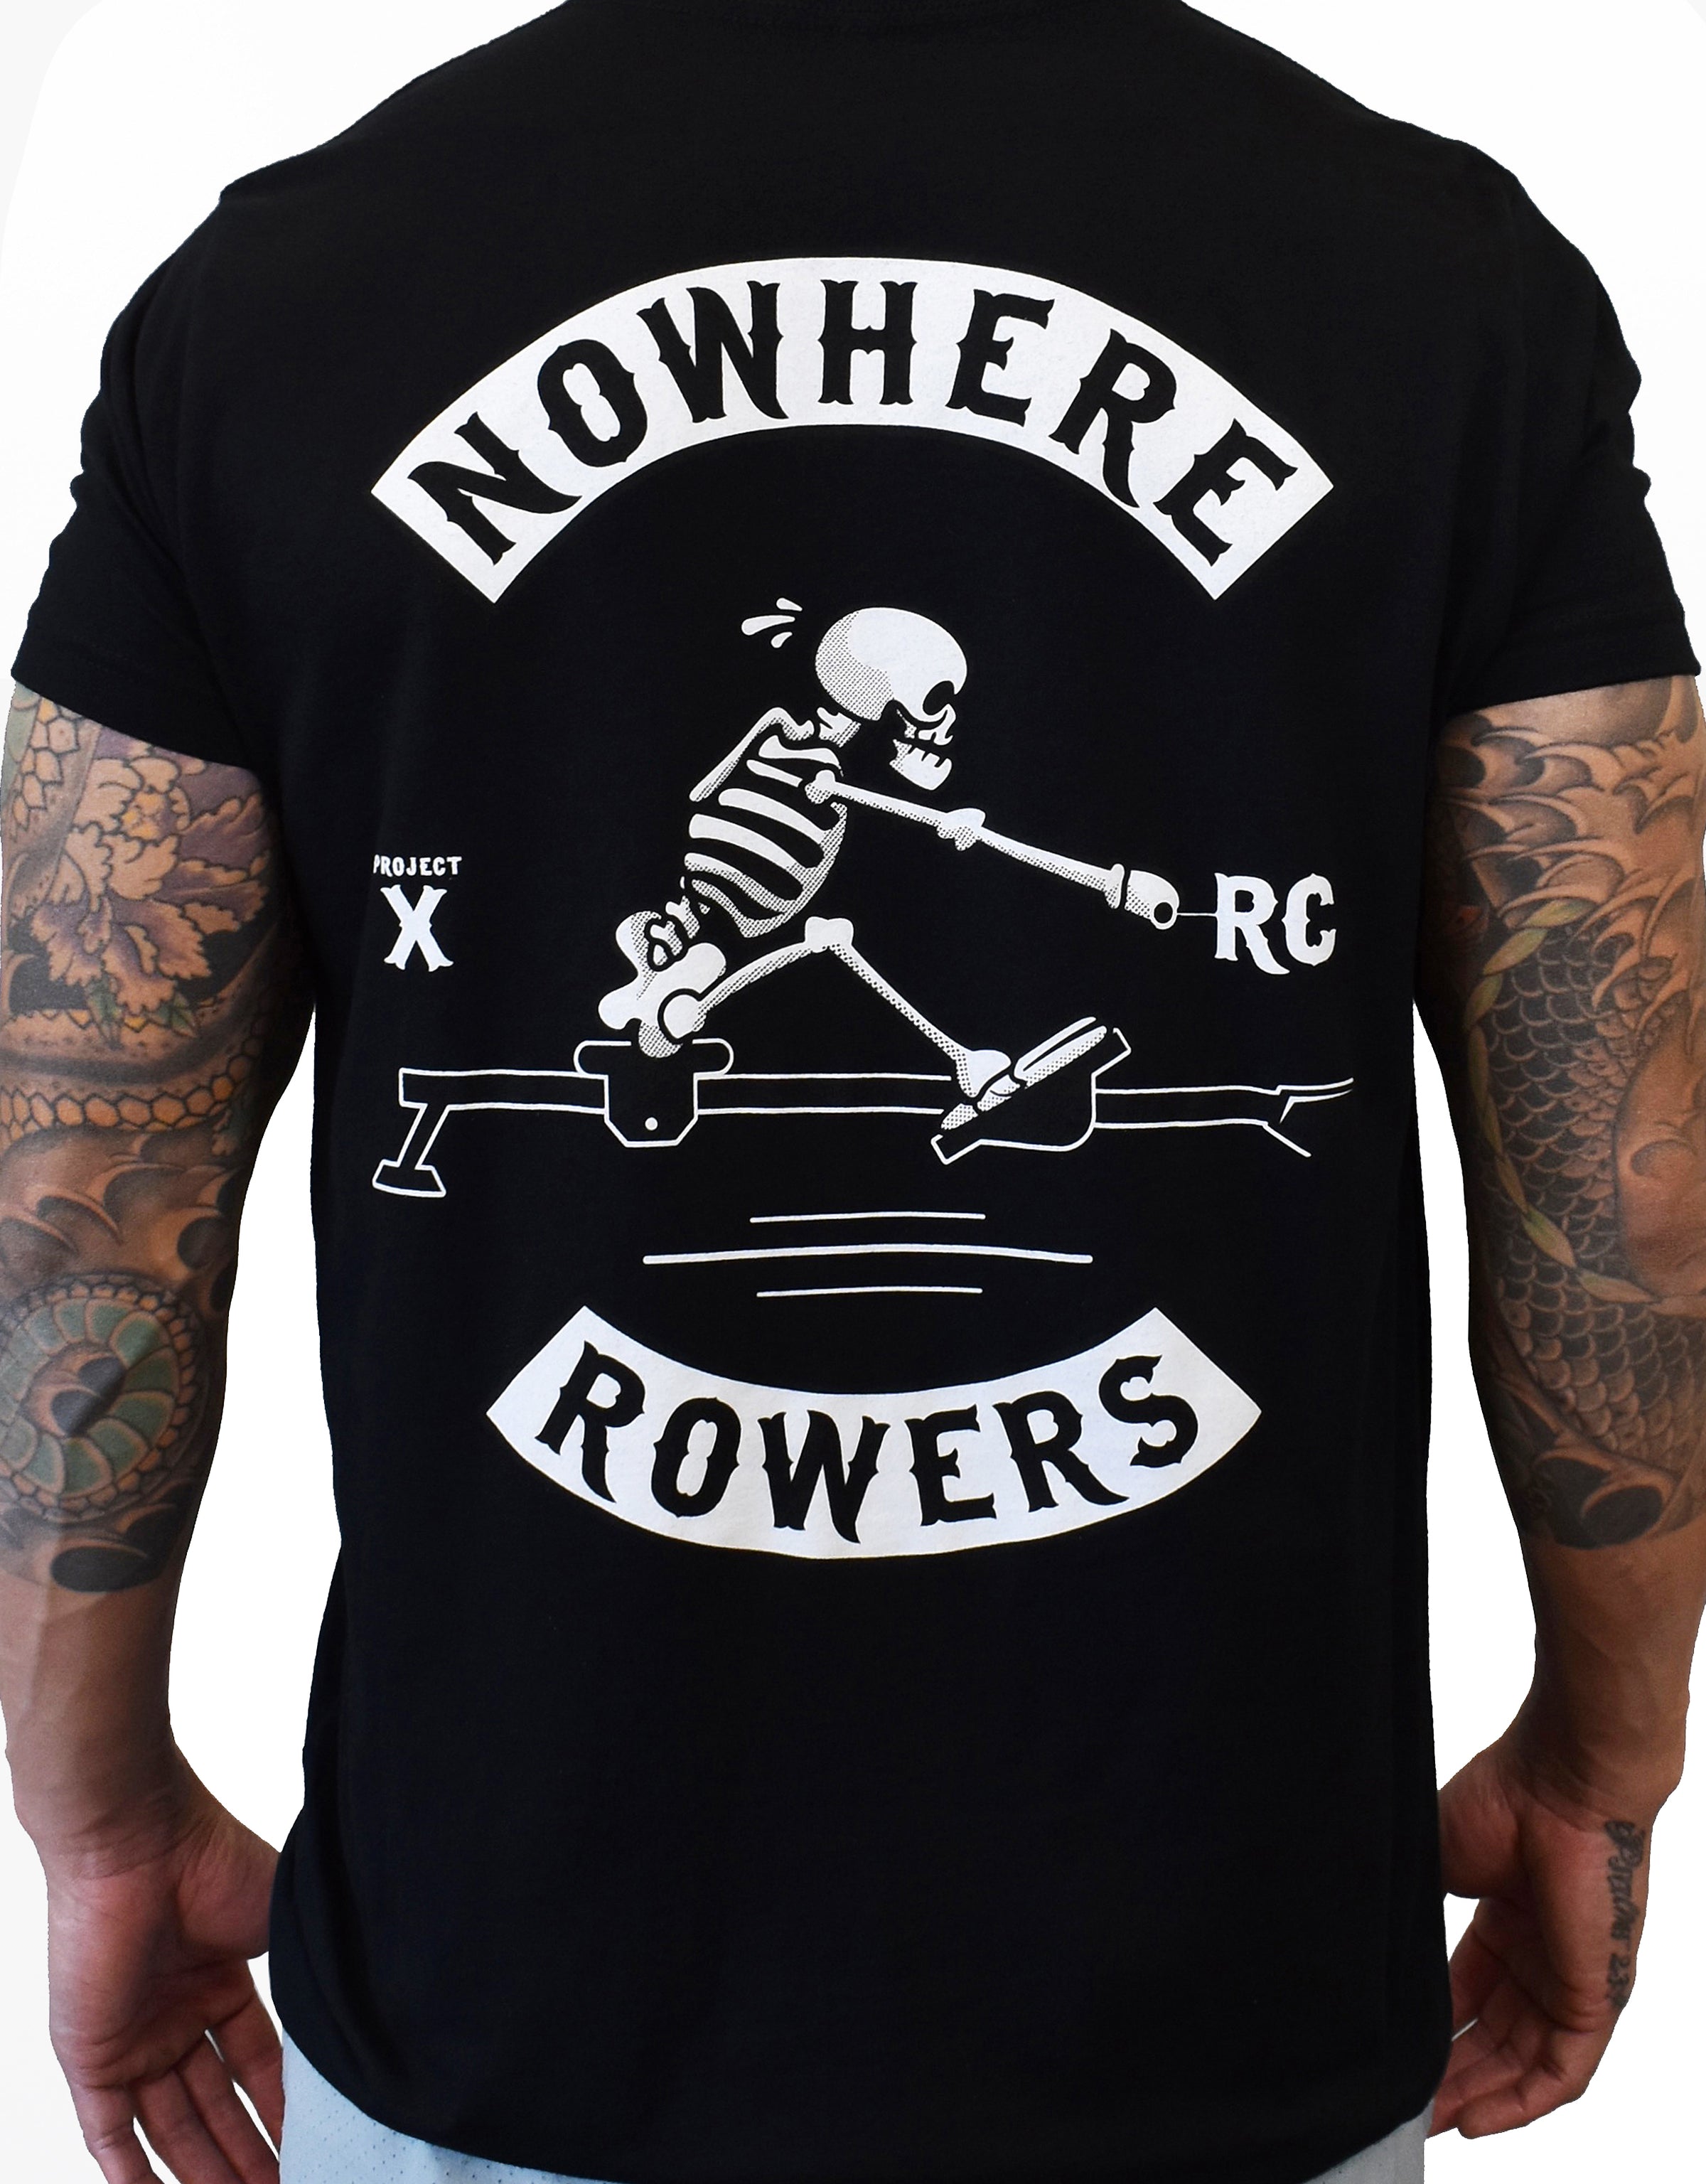 Men's 'Nowhere Rowers' Tee